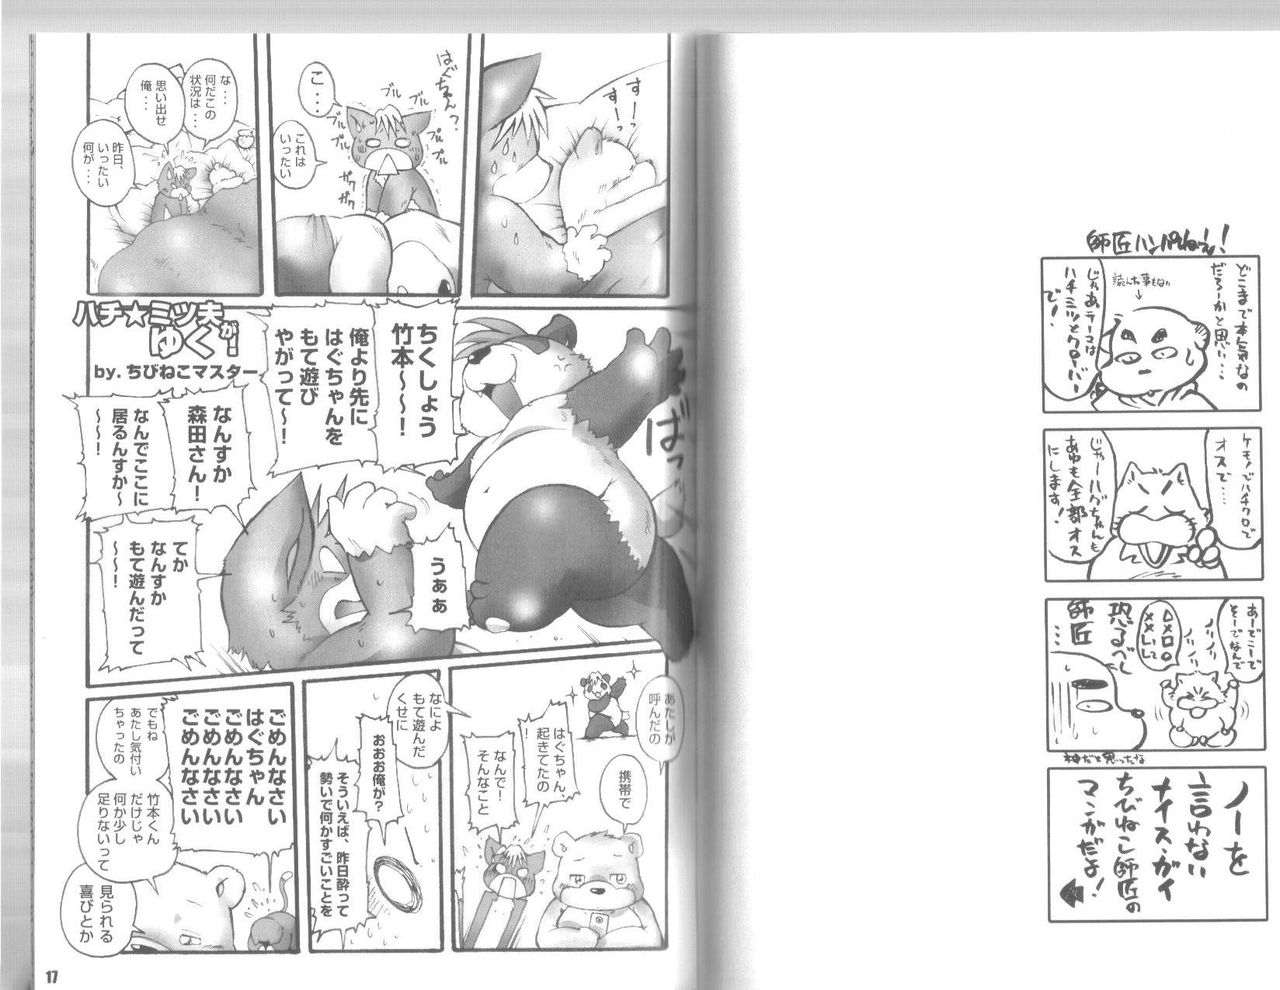 (Osuket 4) [Kimagure na Inu. (Wantaro, Chibineco Master) Beast Power Go! Go! MARUHADAKA (雄ケット4) [キマグレナイヌ。 (ワンタロ、ちびねこマスター) Beast Power Go! Go! 丸裸